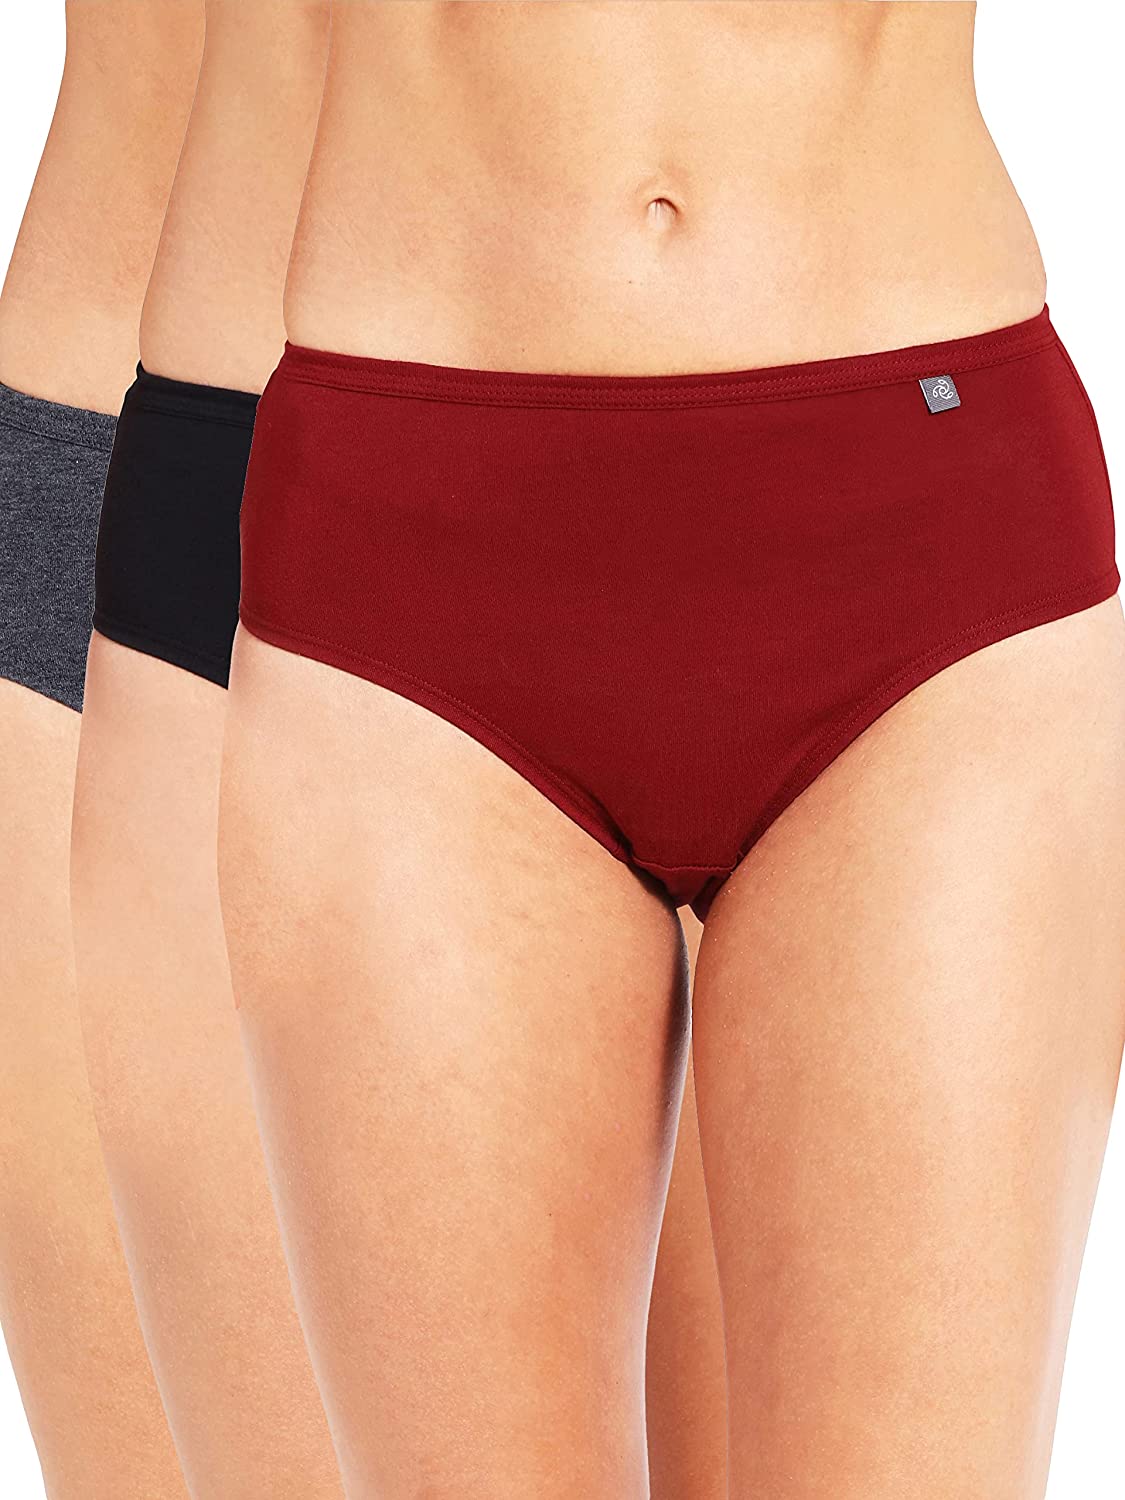 Women's Panties  Comfortable and Stylish Underwear Jockey